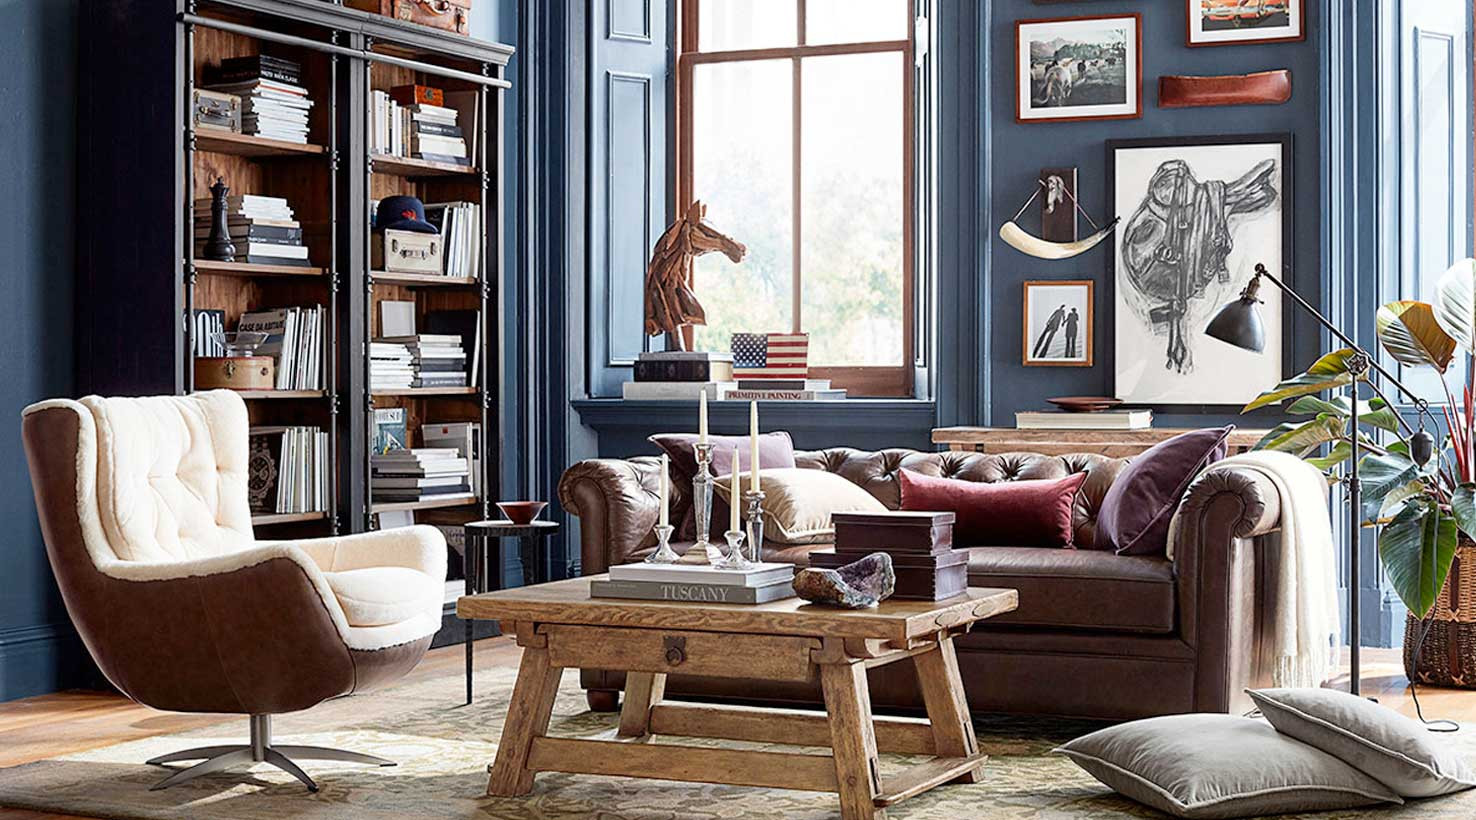 Paint Schemes For Living Room
 Living Room Paint Color Ideas